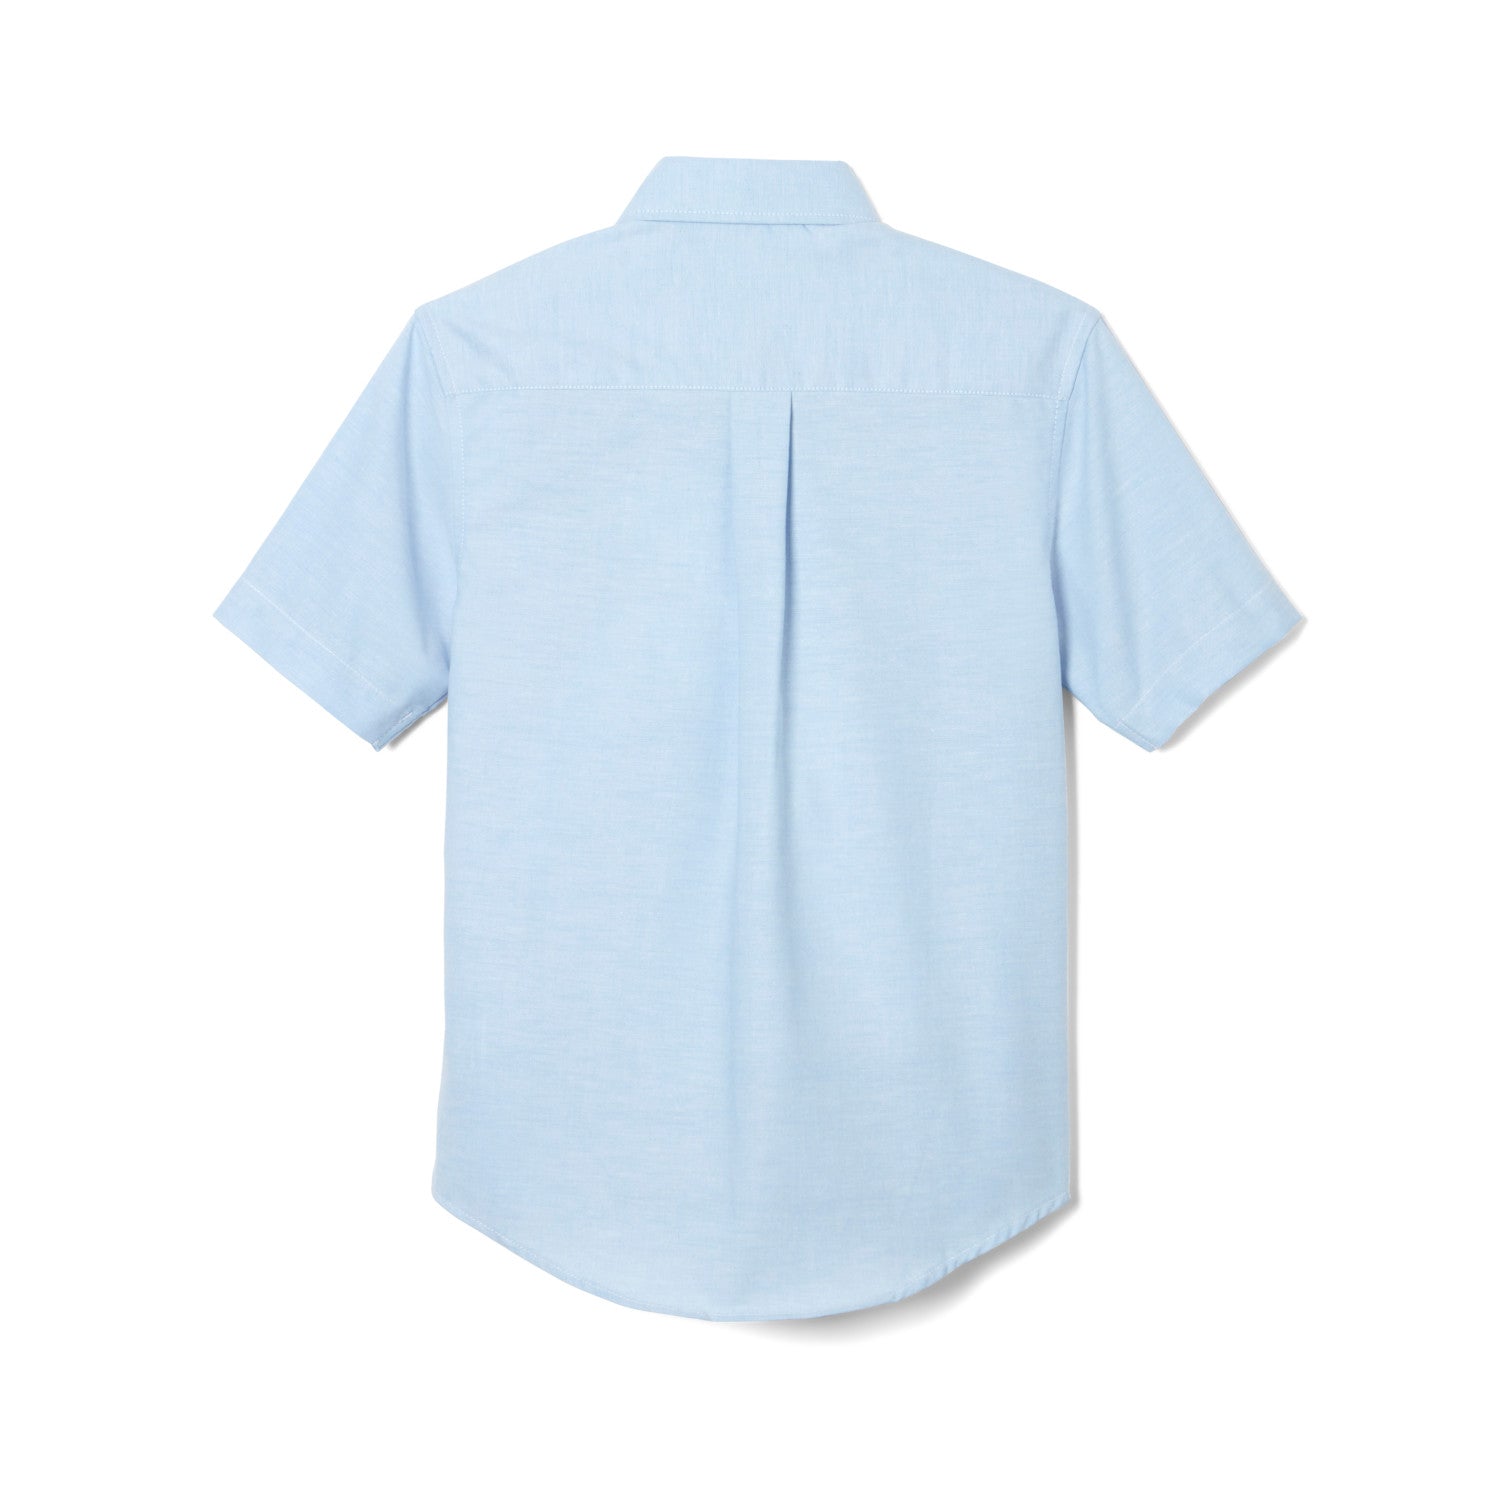 French Toast Boys 8-20 Short Sleeve Oxford Shirt